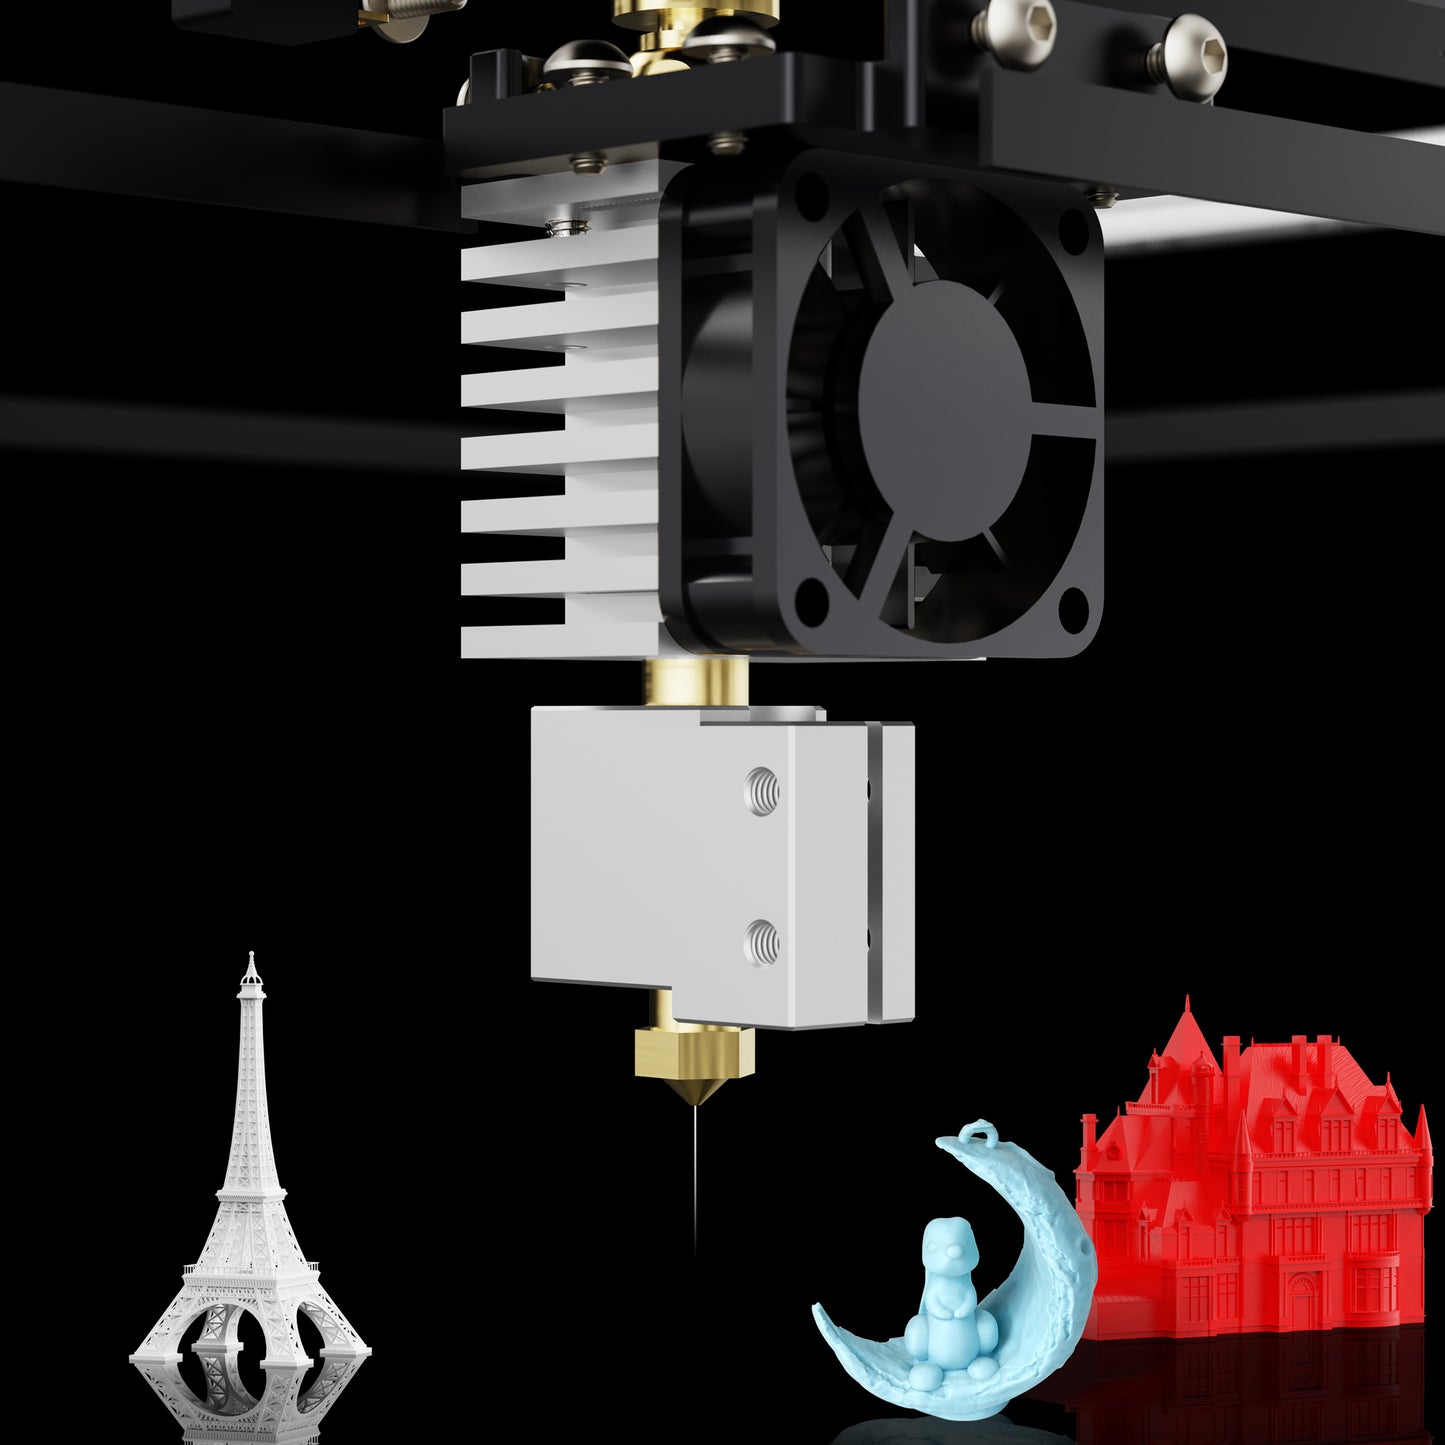 TwoTrees SP-5 V3 CoreXY 3D Printer